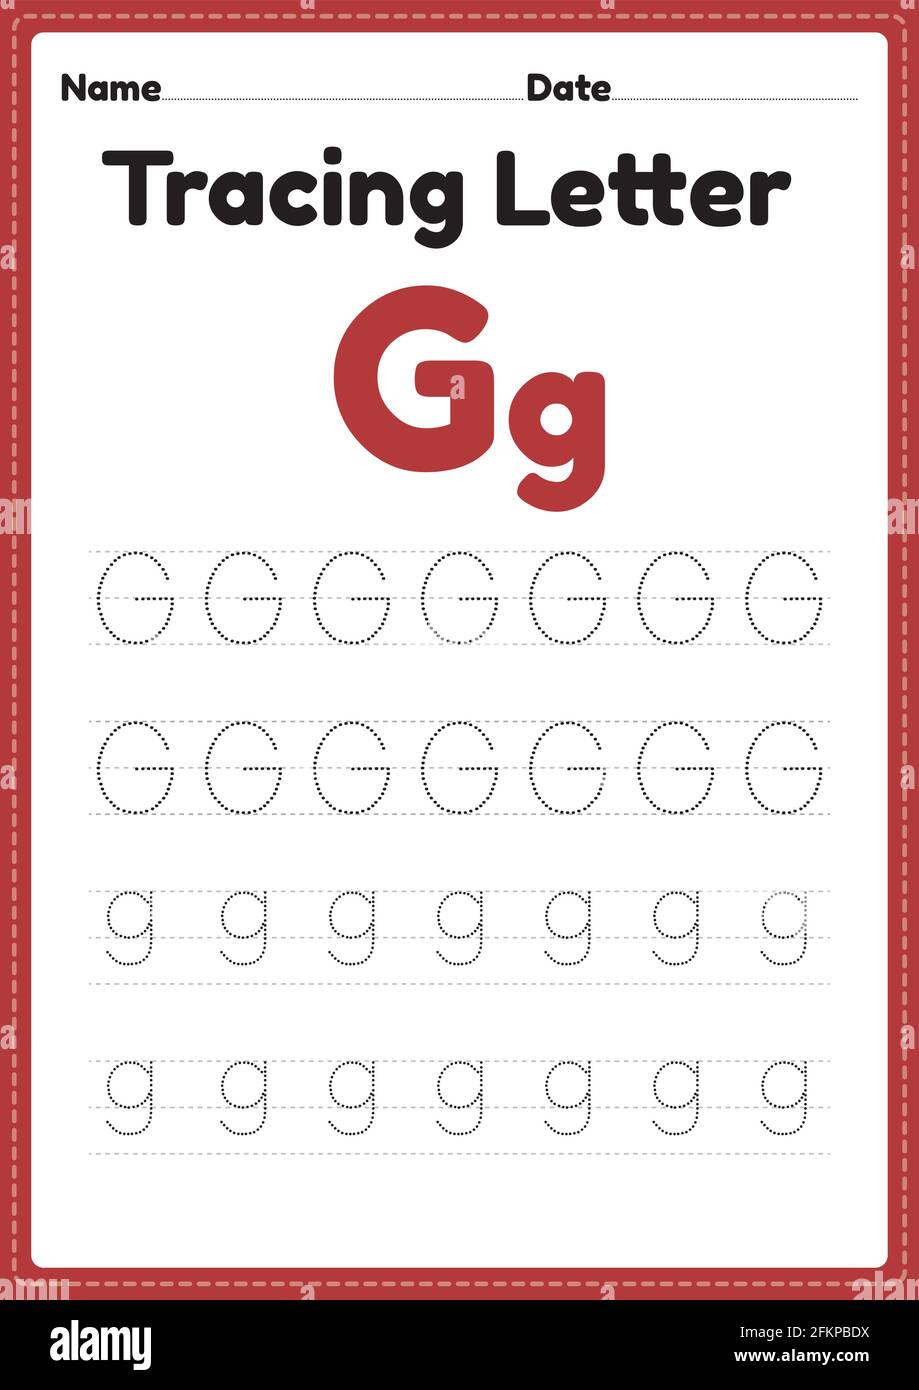 tracing-letter-g-alphabet-worksheet-for-kindergarten-and-preschool-kids